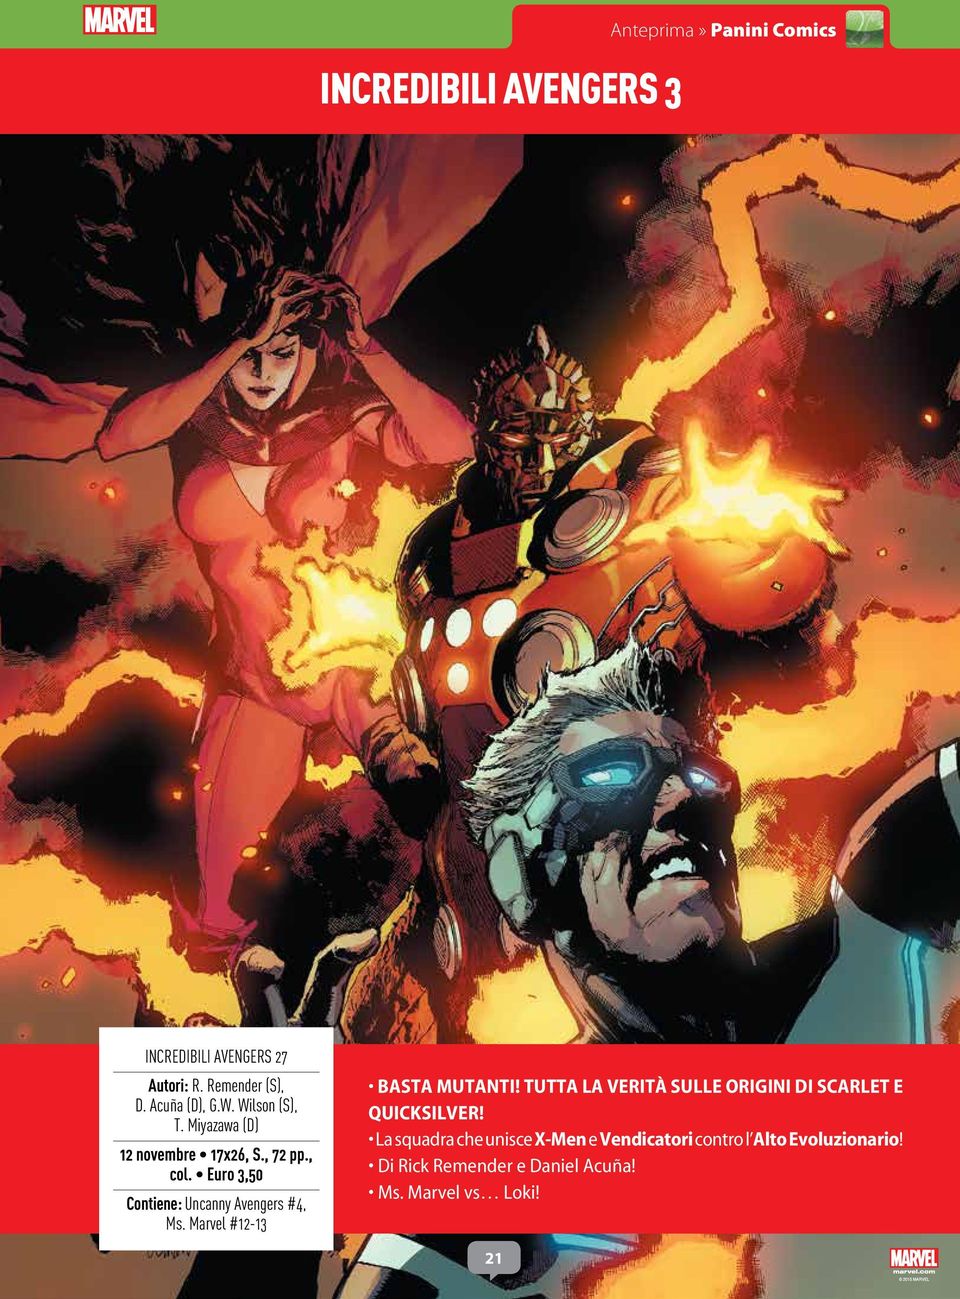 Euro 3,50 Contiene: Uncanny Avengers #4, Ms. Marvel #12-13 BASTA MUTANTI!